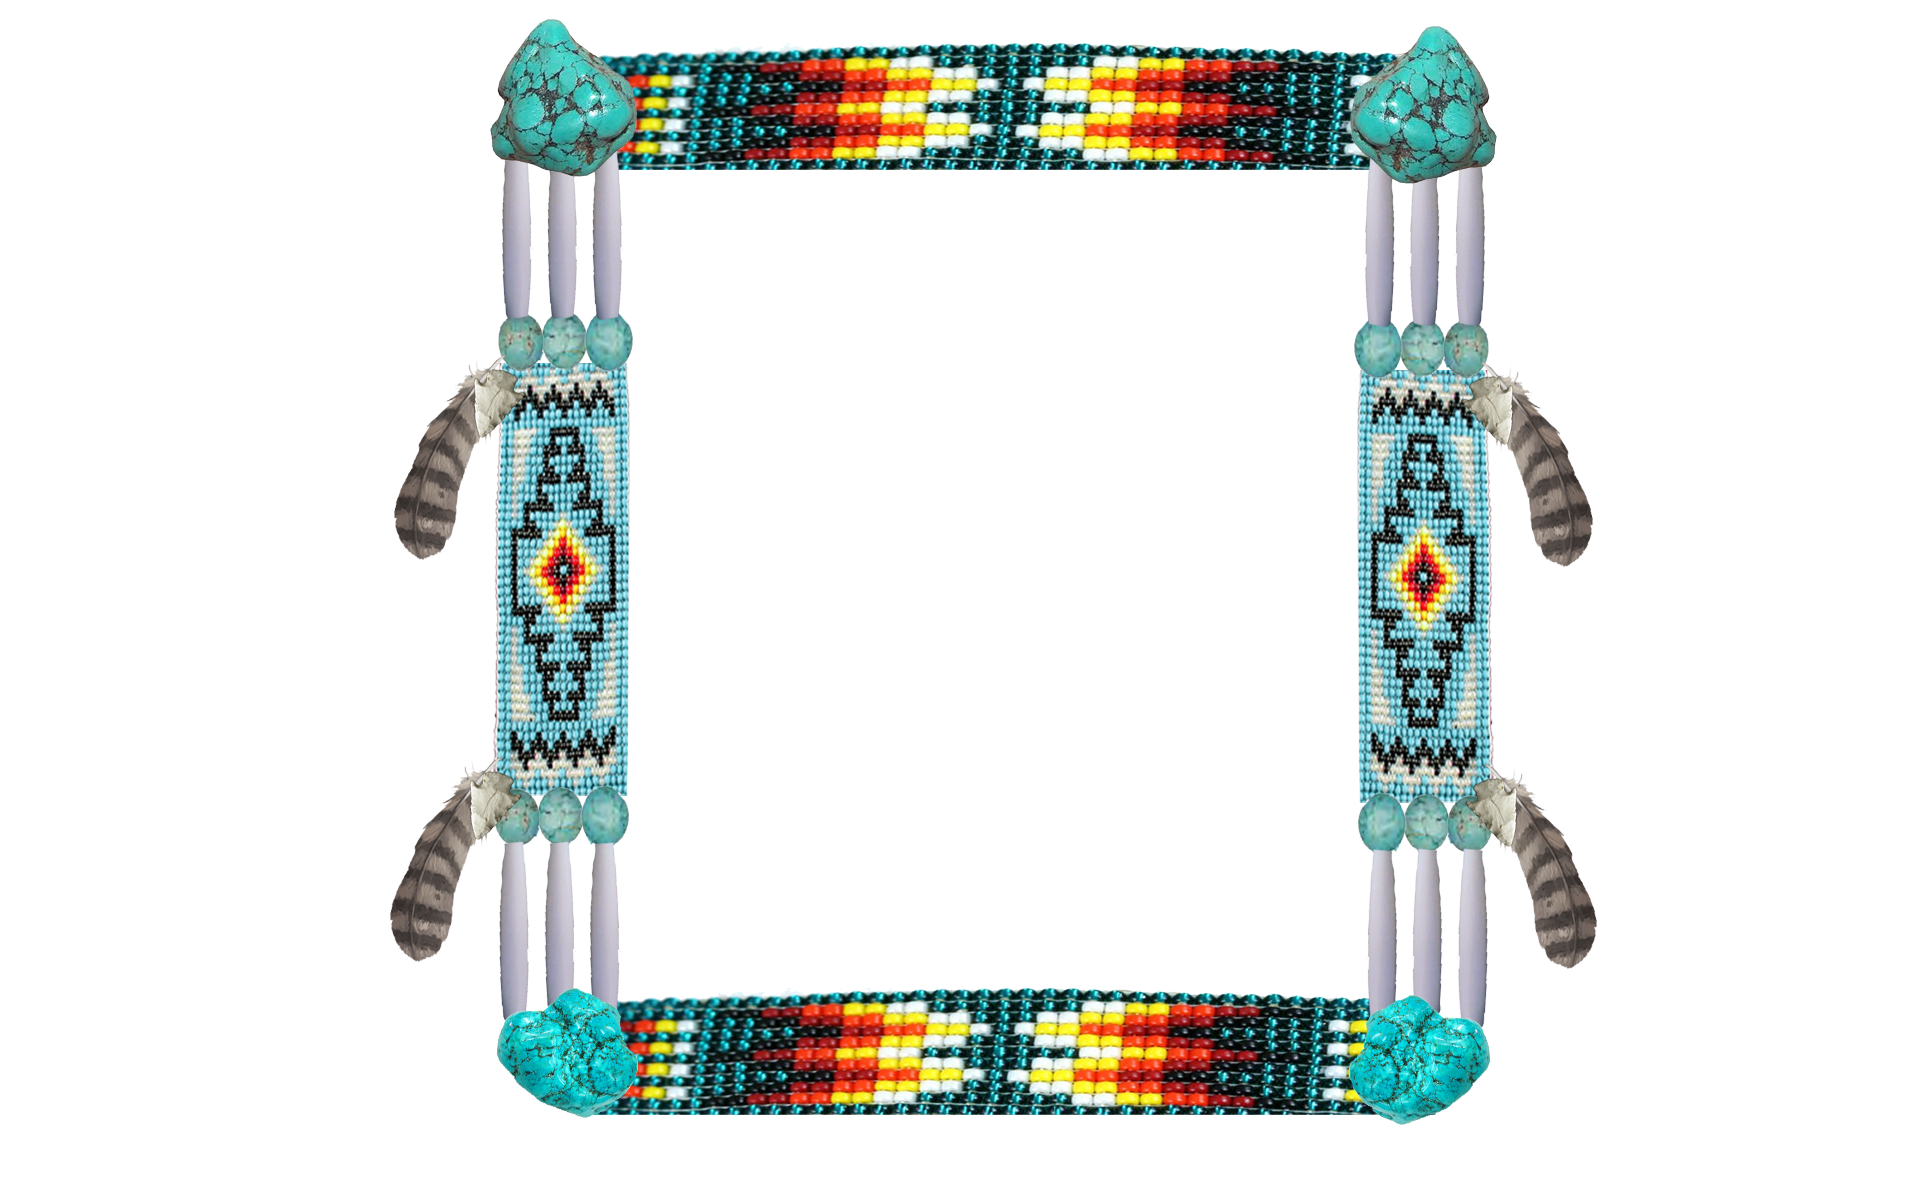 Native American Frame By Writerfairy